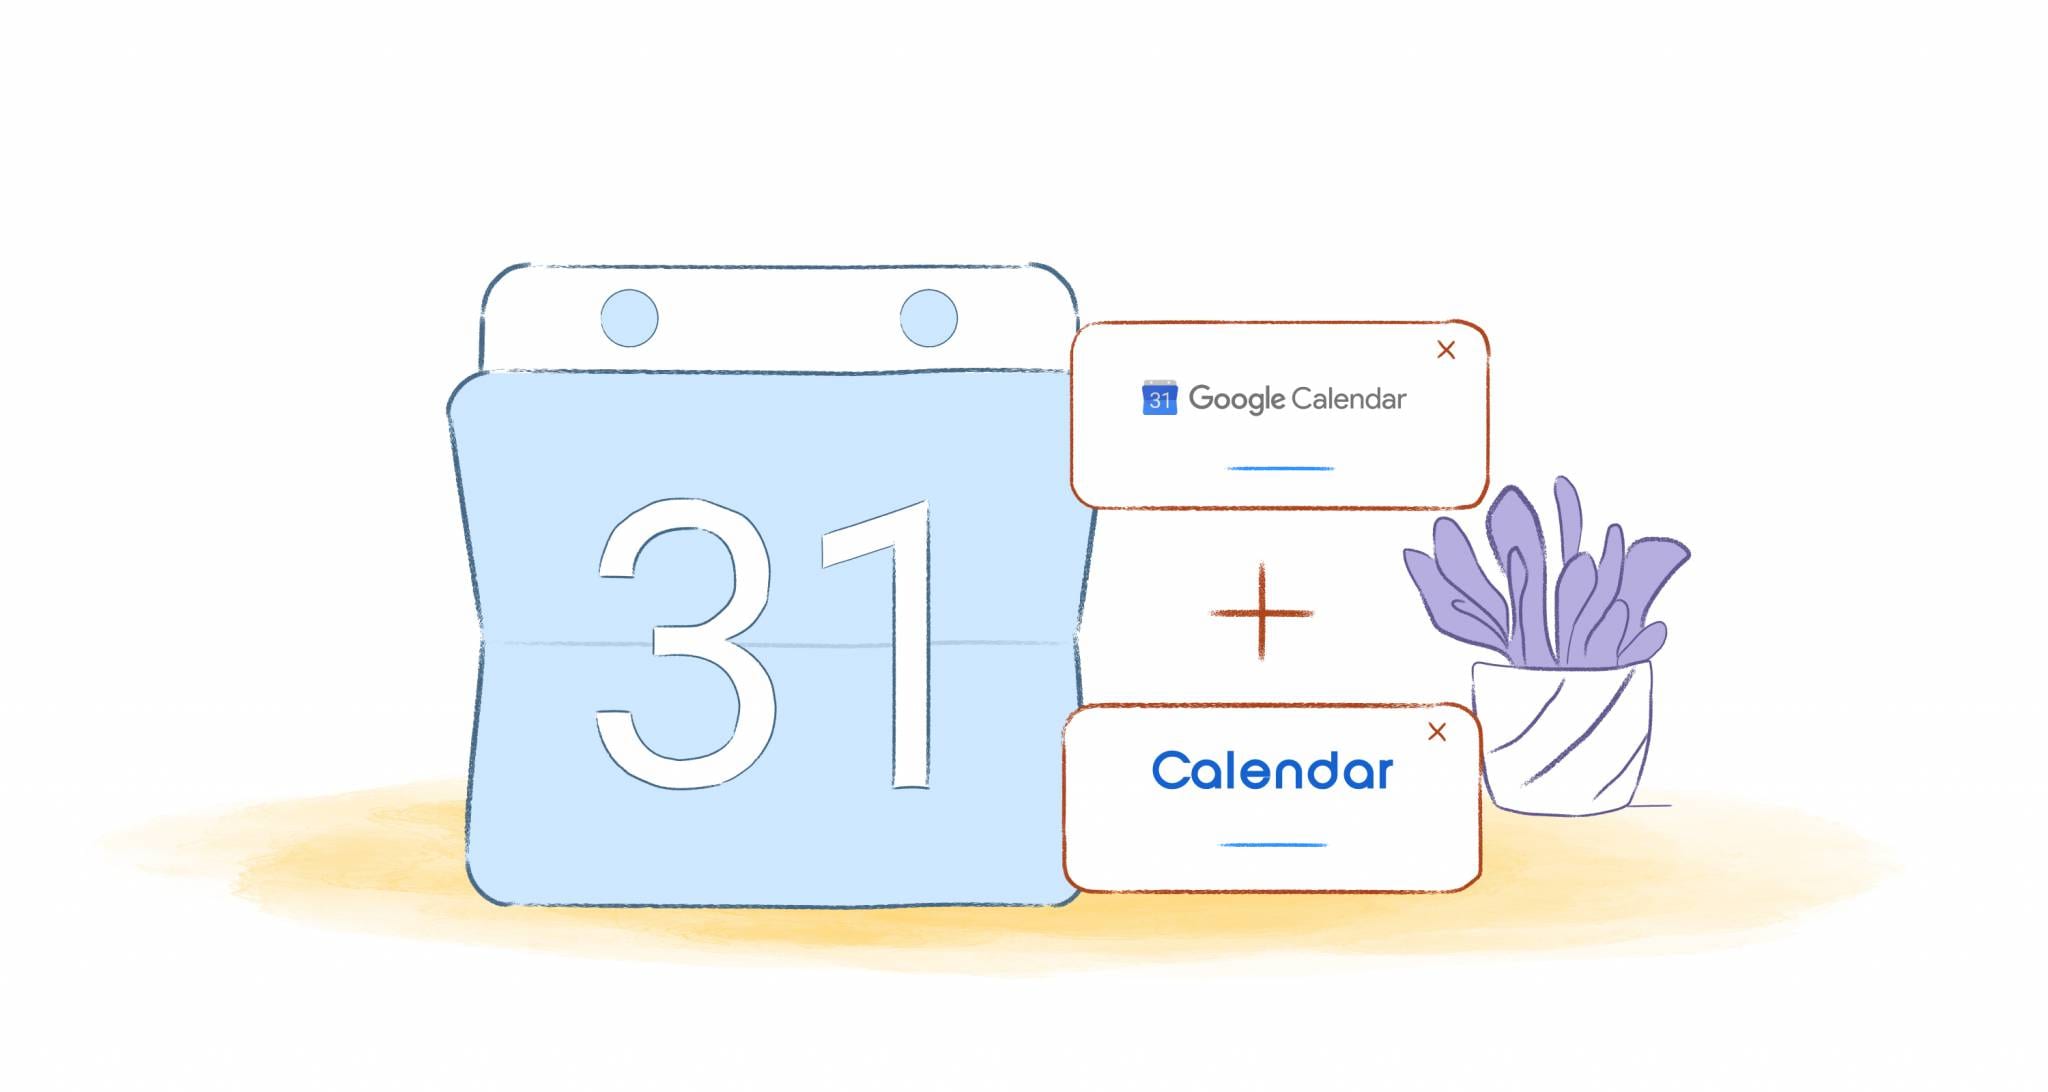 How To Delete A Google Calendar